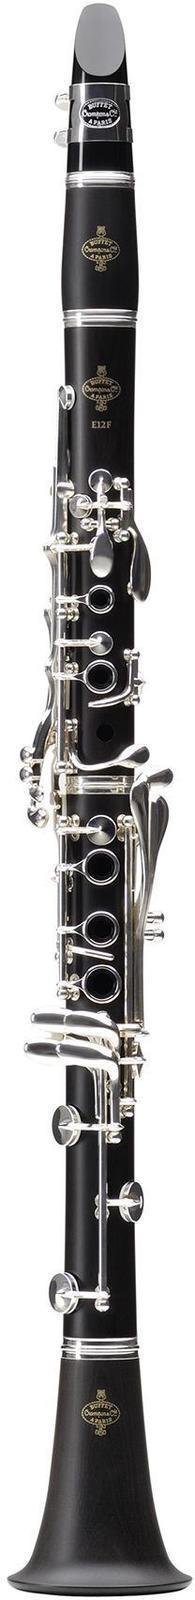 Bb Clarinet Buffet Crampon E12F 18/6 Bb Clarinet